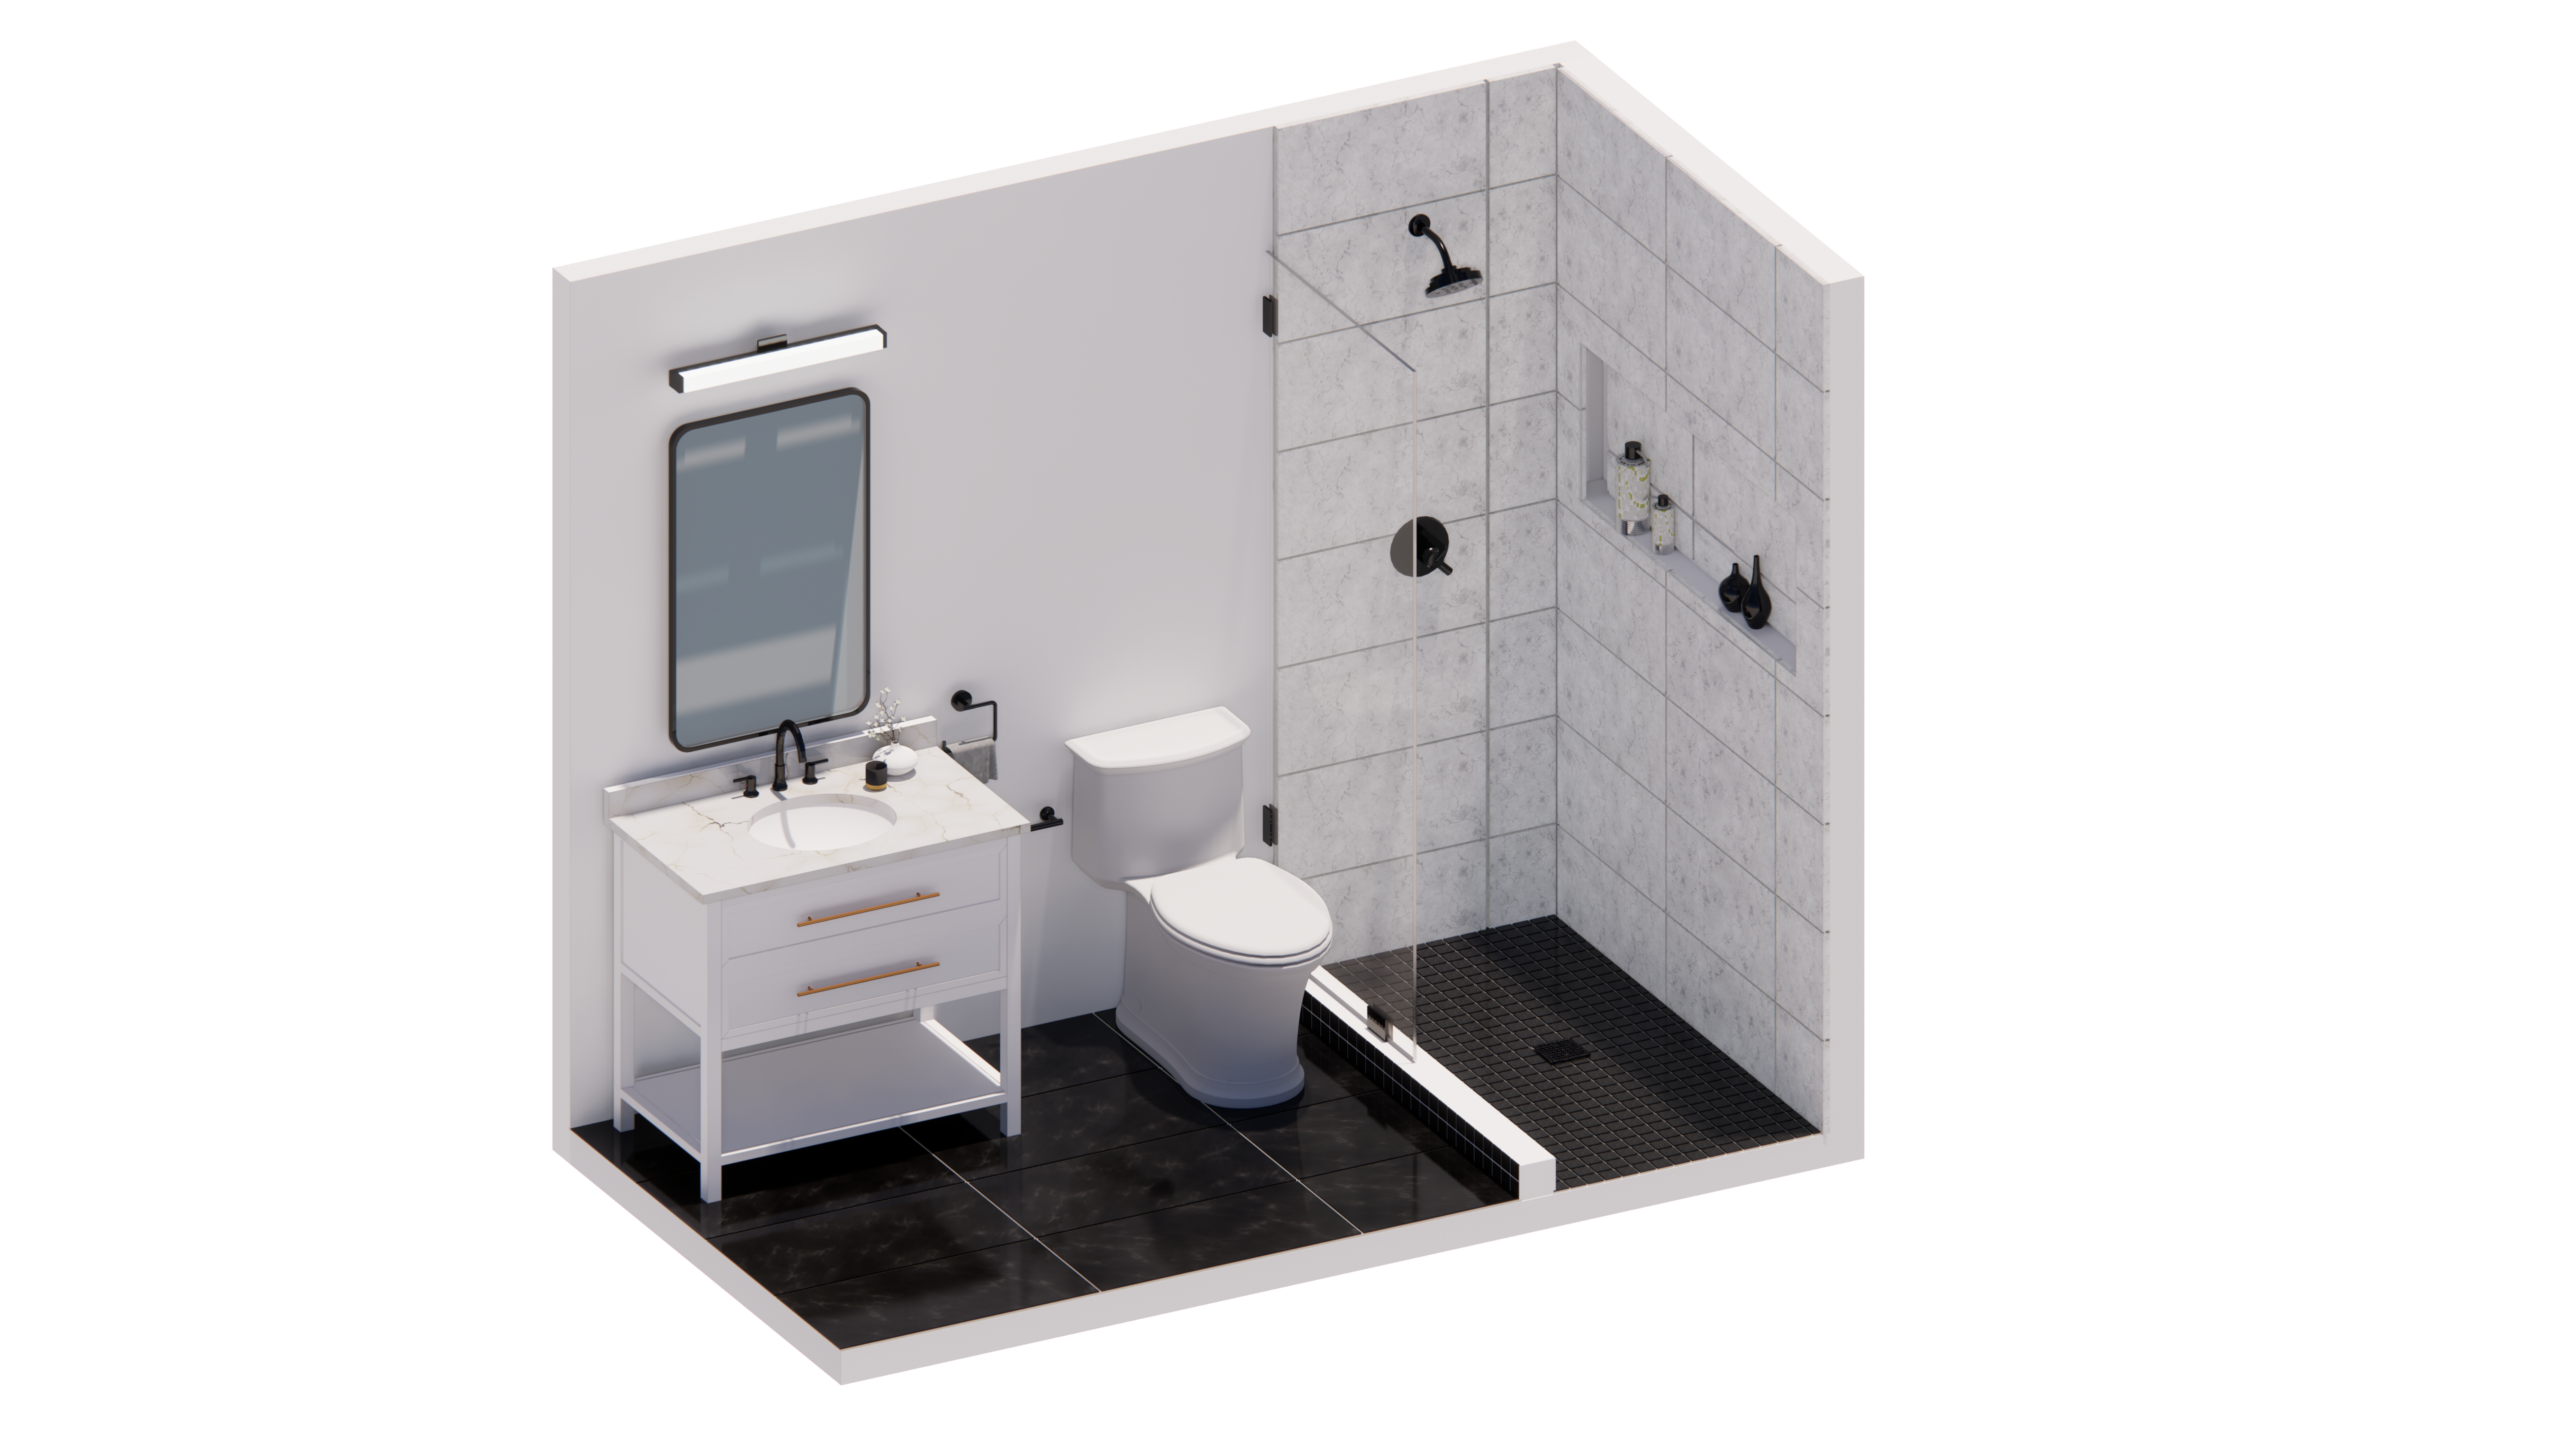 Mont balnc - NOMI Guest bathroom remodel collection